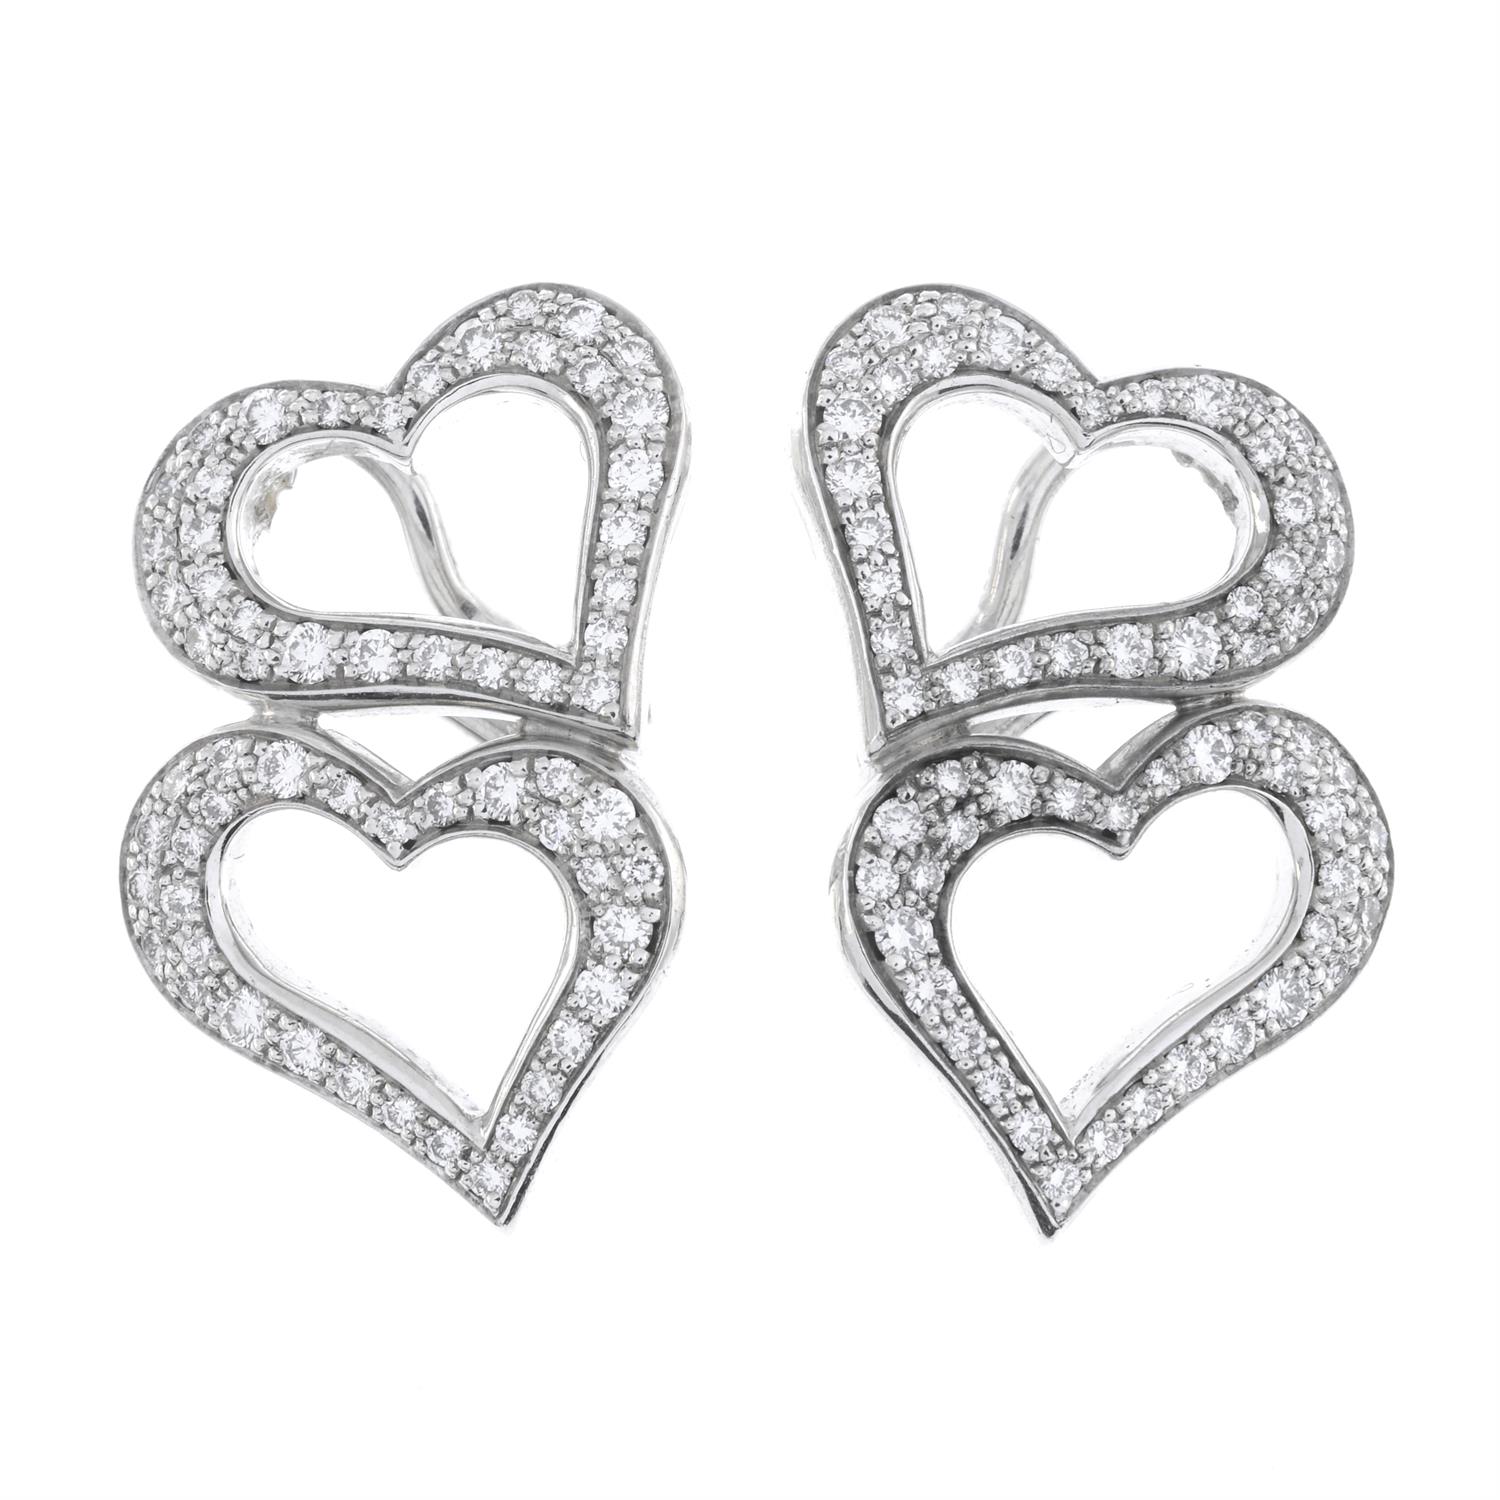 Diamond heart earrings, by Piaget - Image 2 of 3